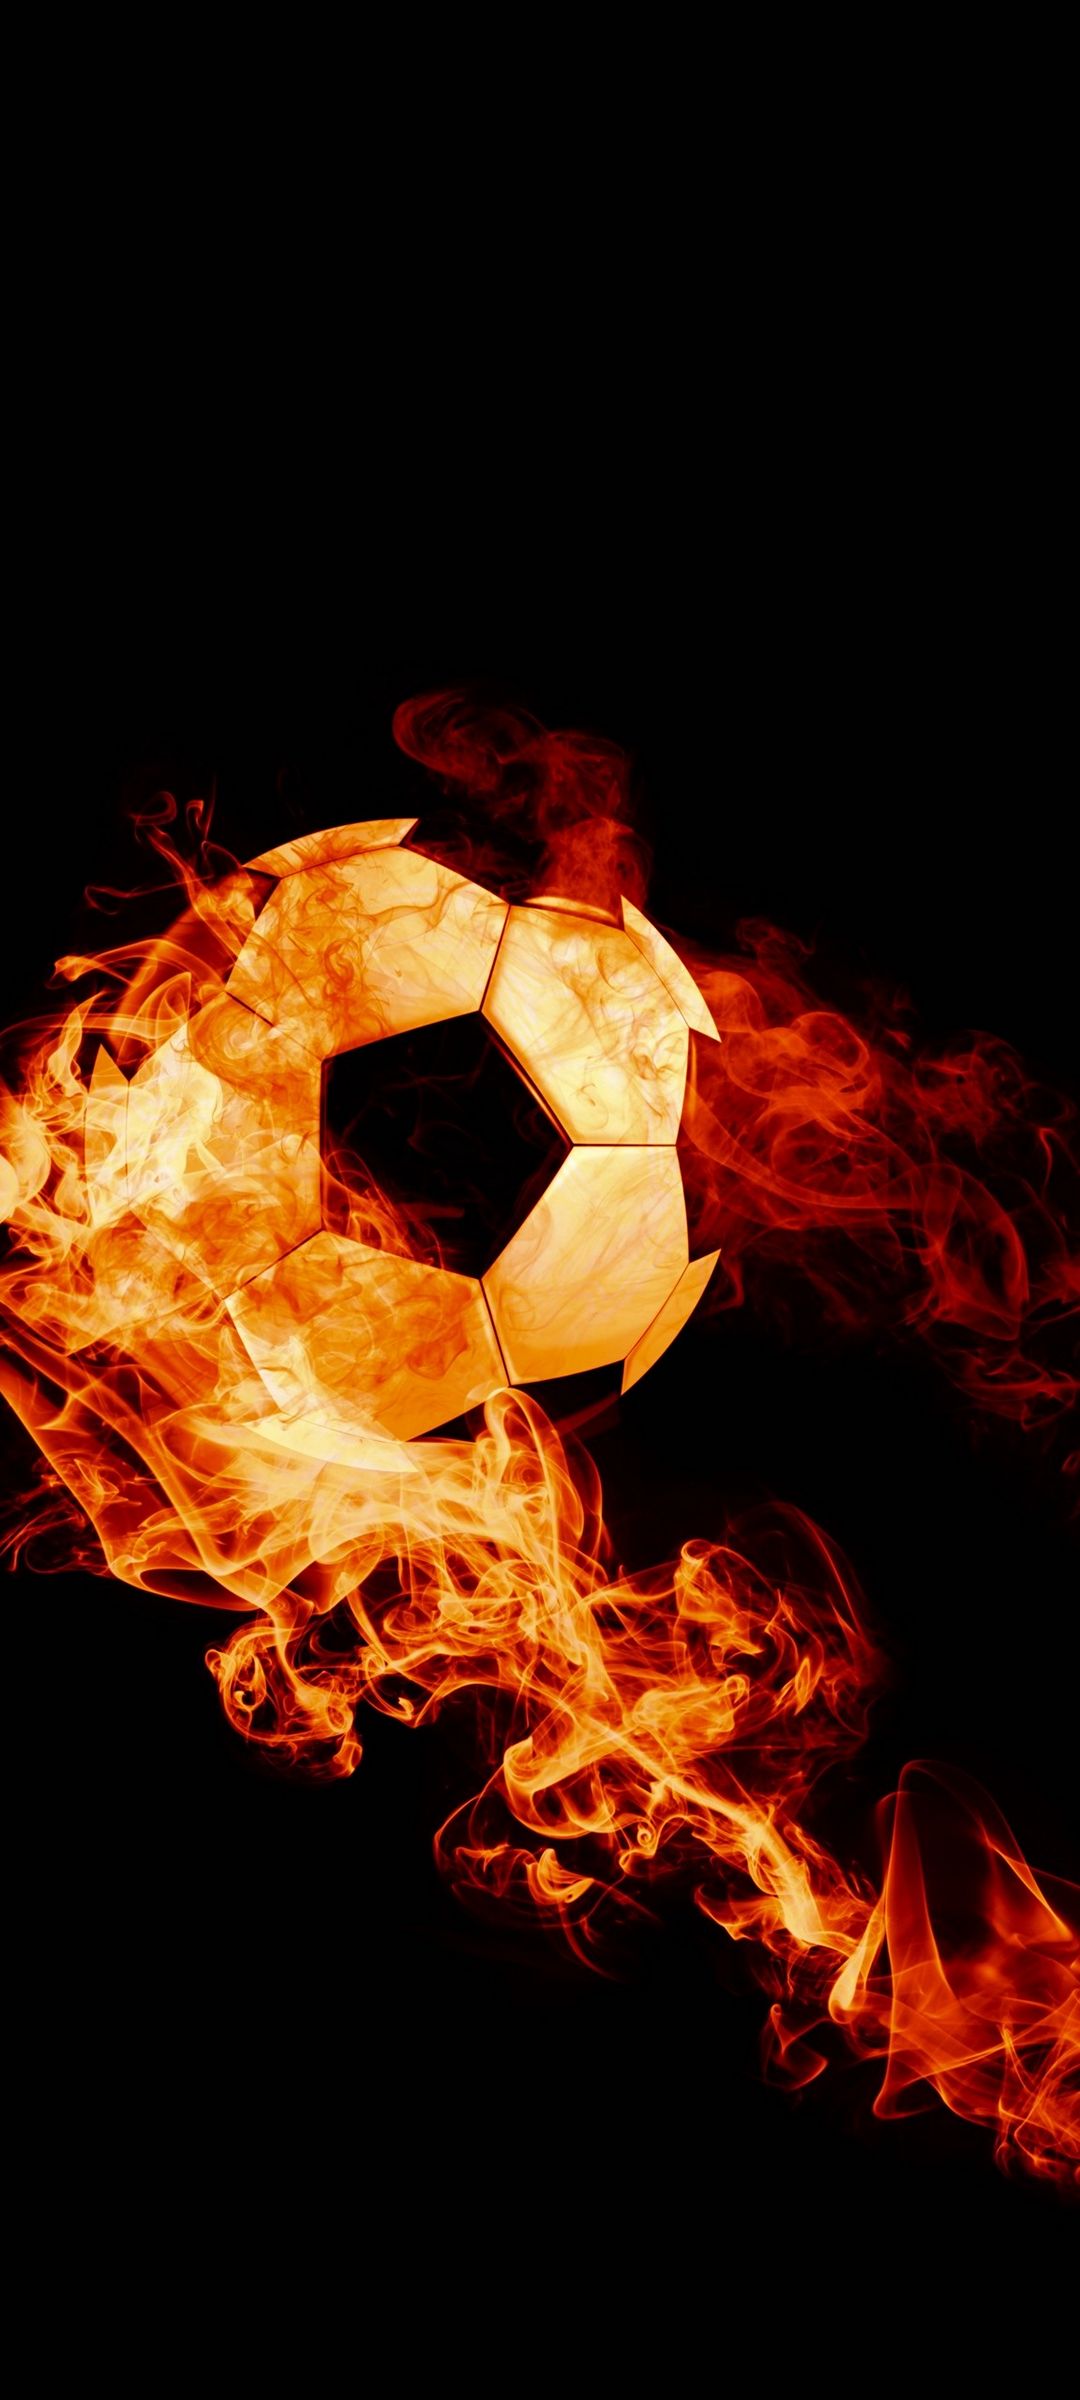 Football Is On Fire Wallpaper